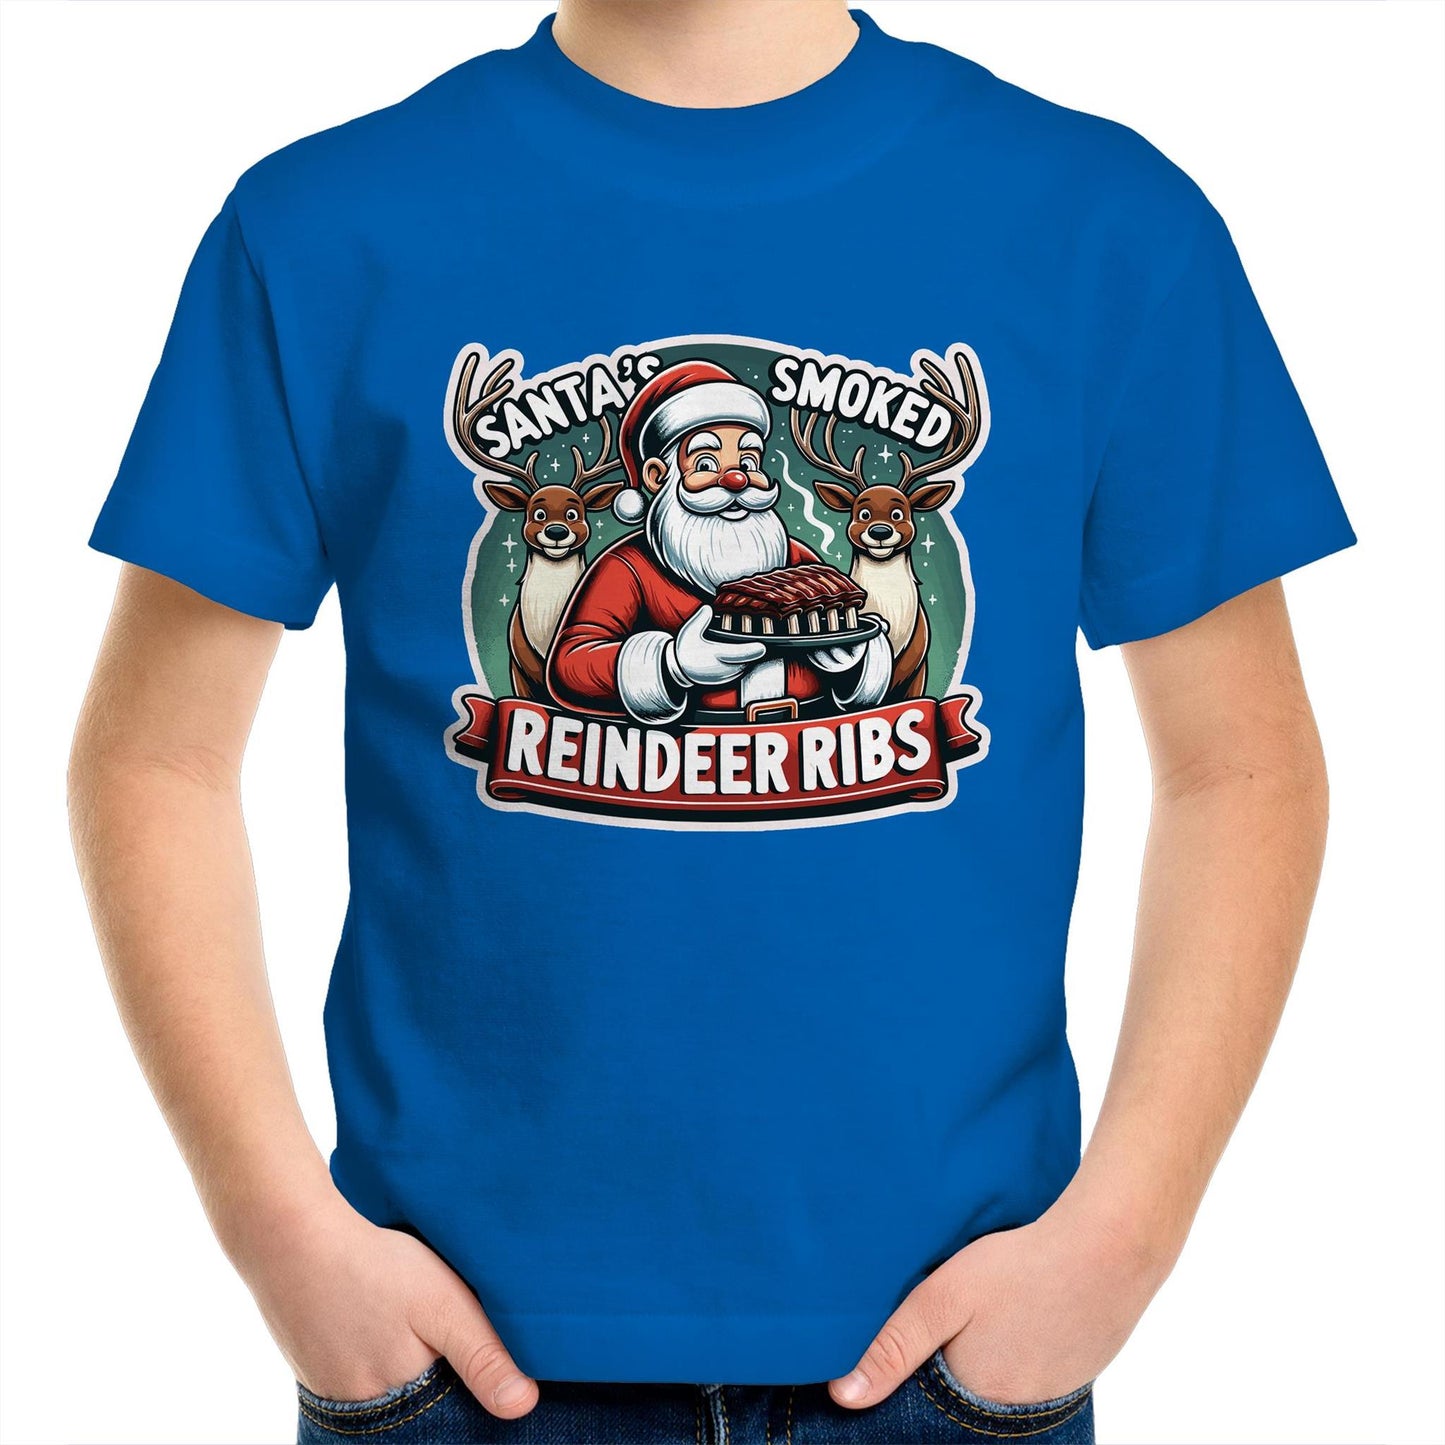 Santas Smoked Reindeer Ribs - AS Colour Kids Youth T-Shirt